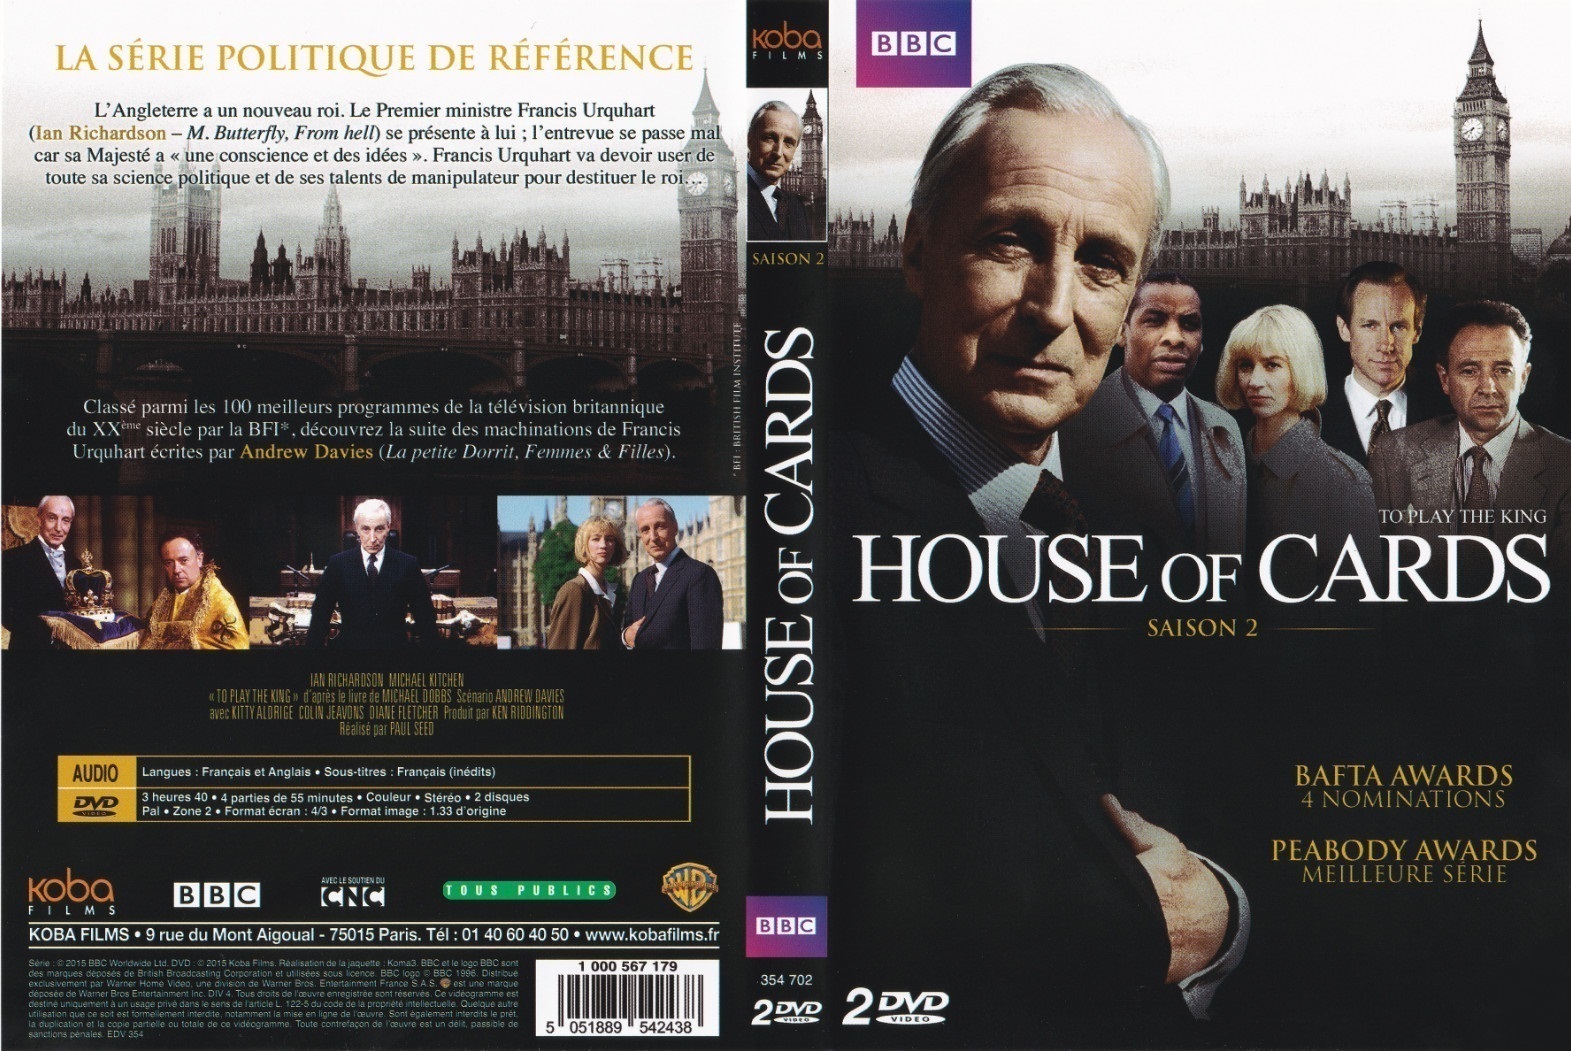 Jaquette DVD House of Cards Saison 2 (UK)